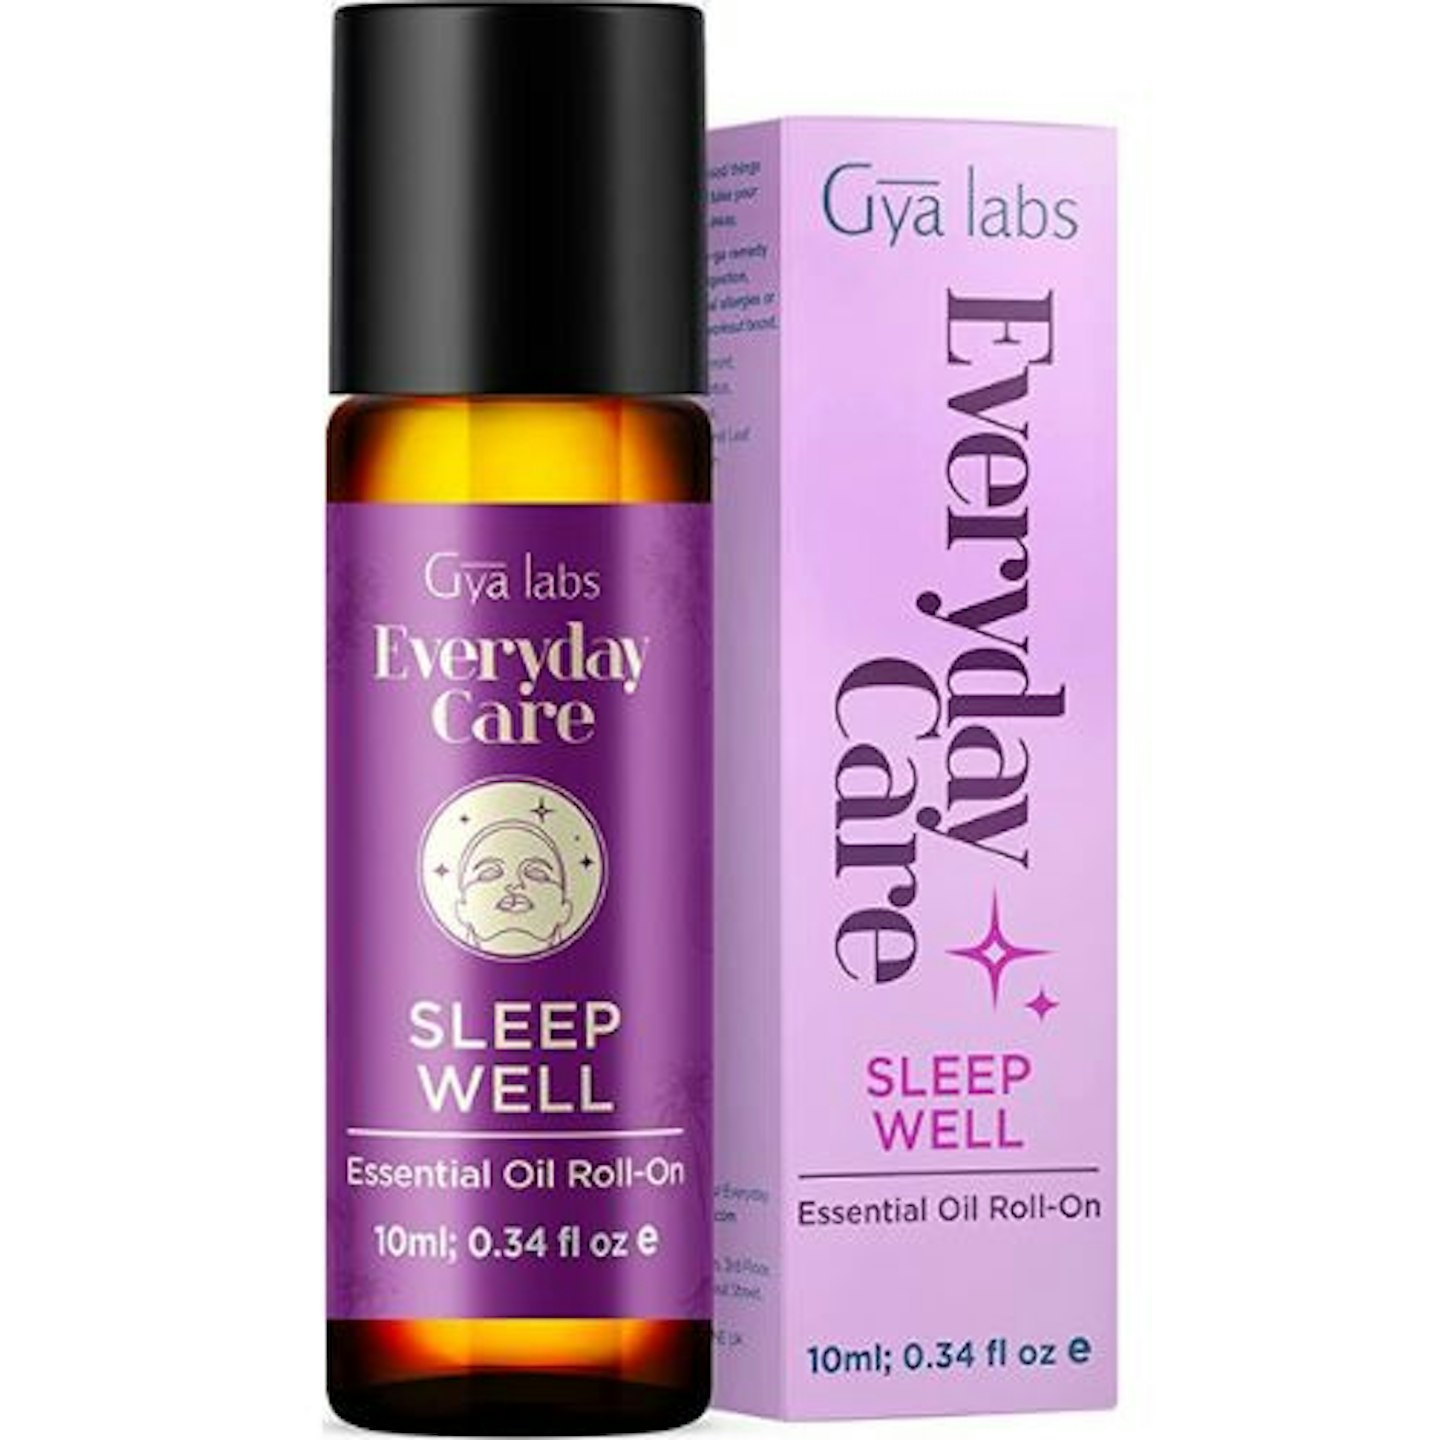 Gya Labs Sleep Well Essential Oil Roll-On